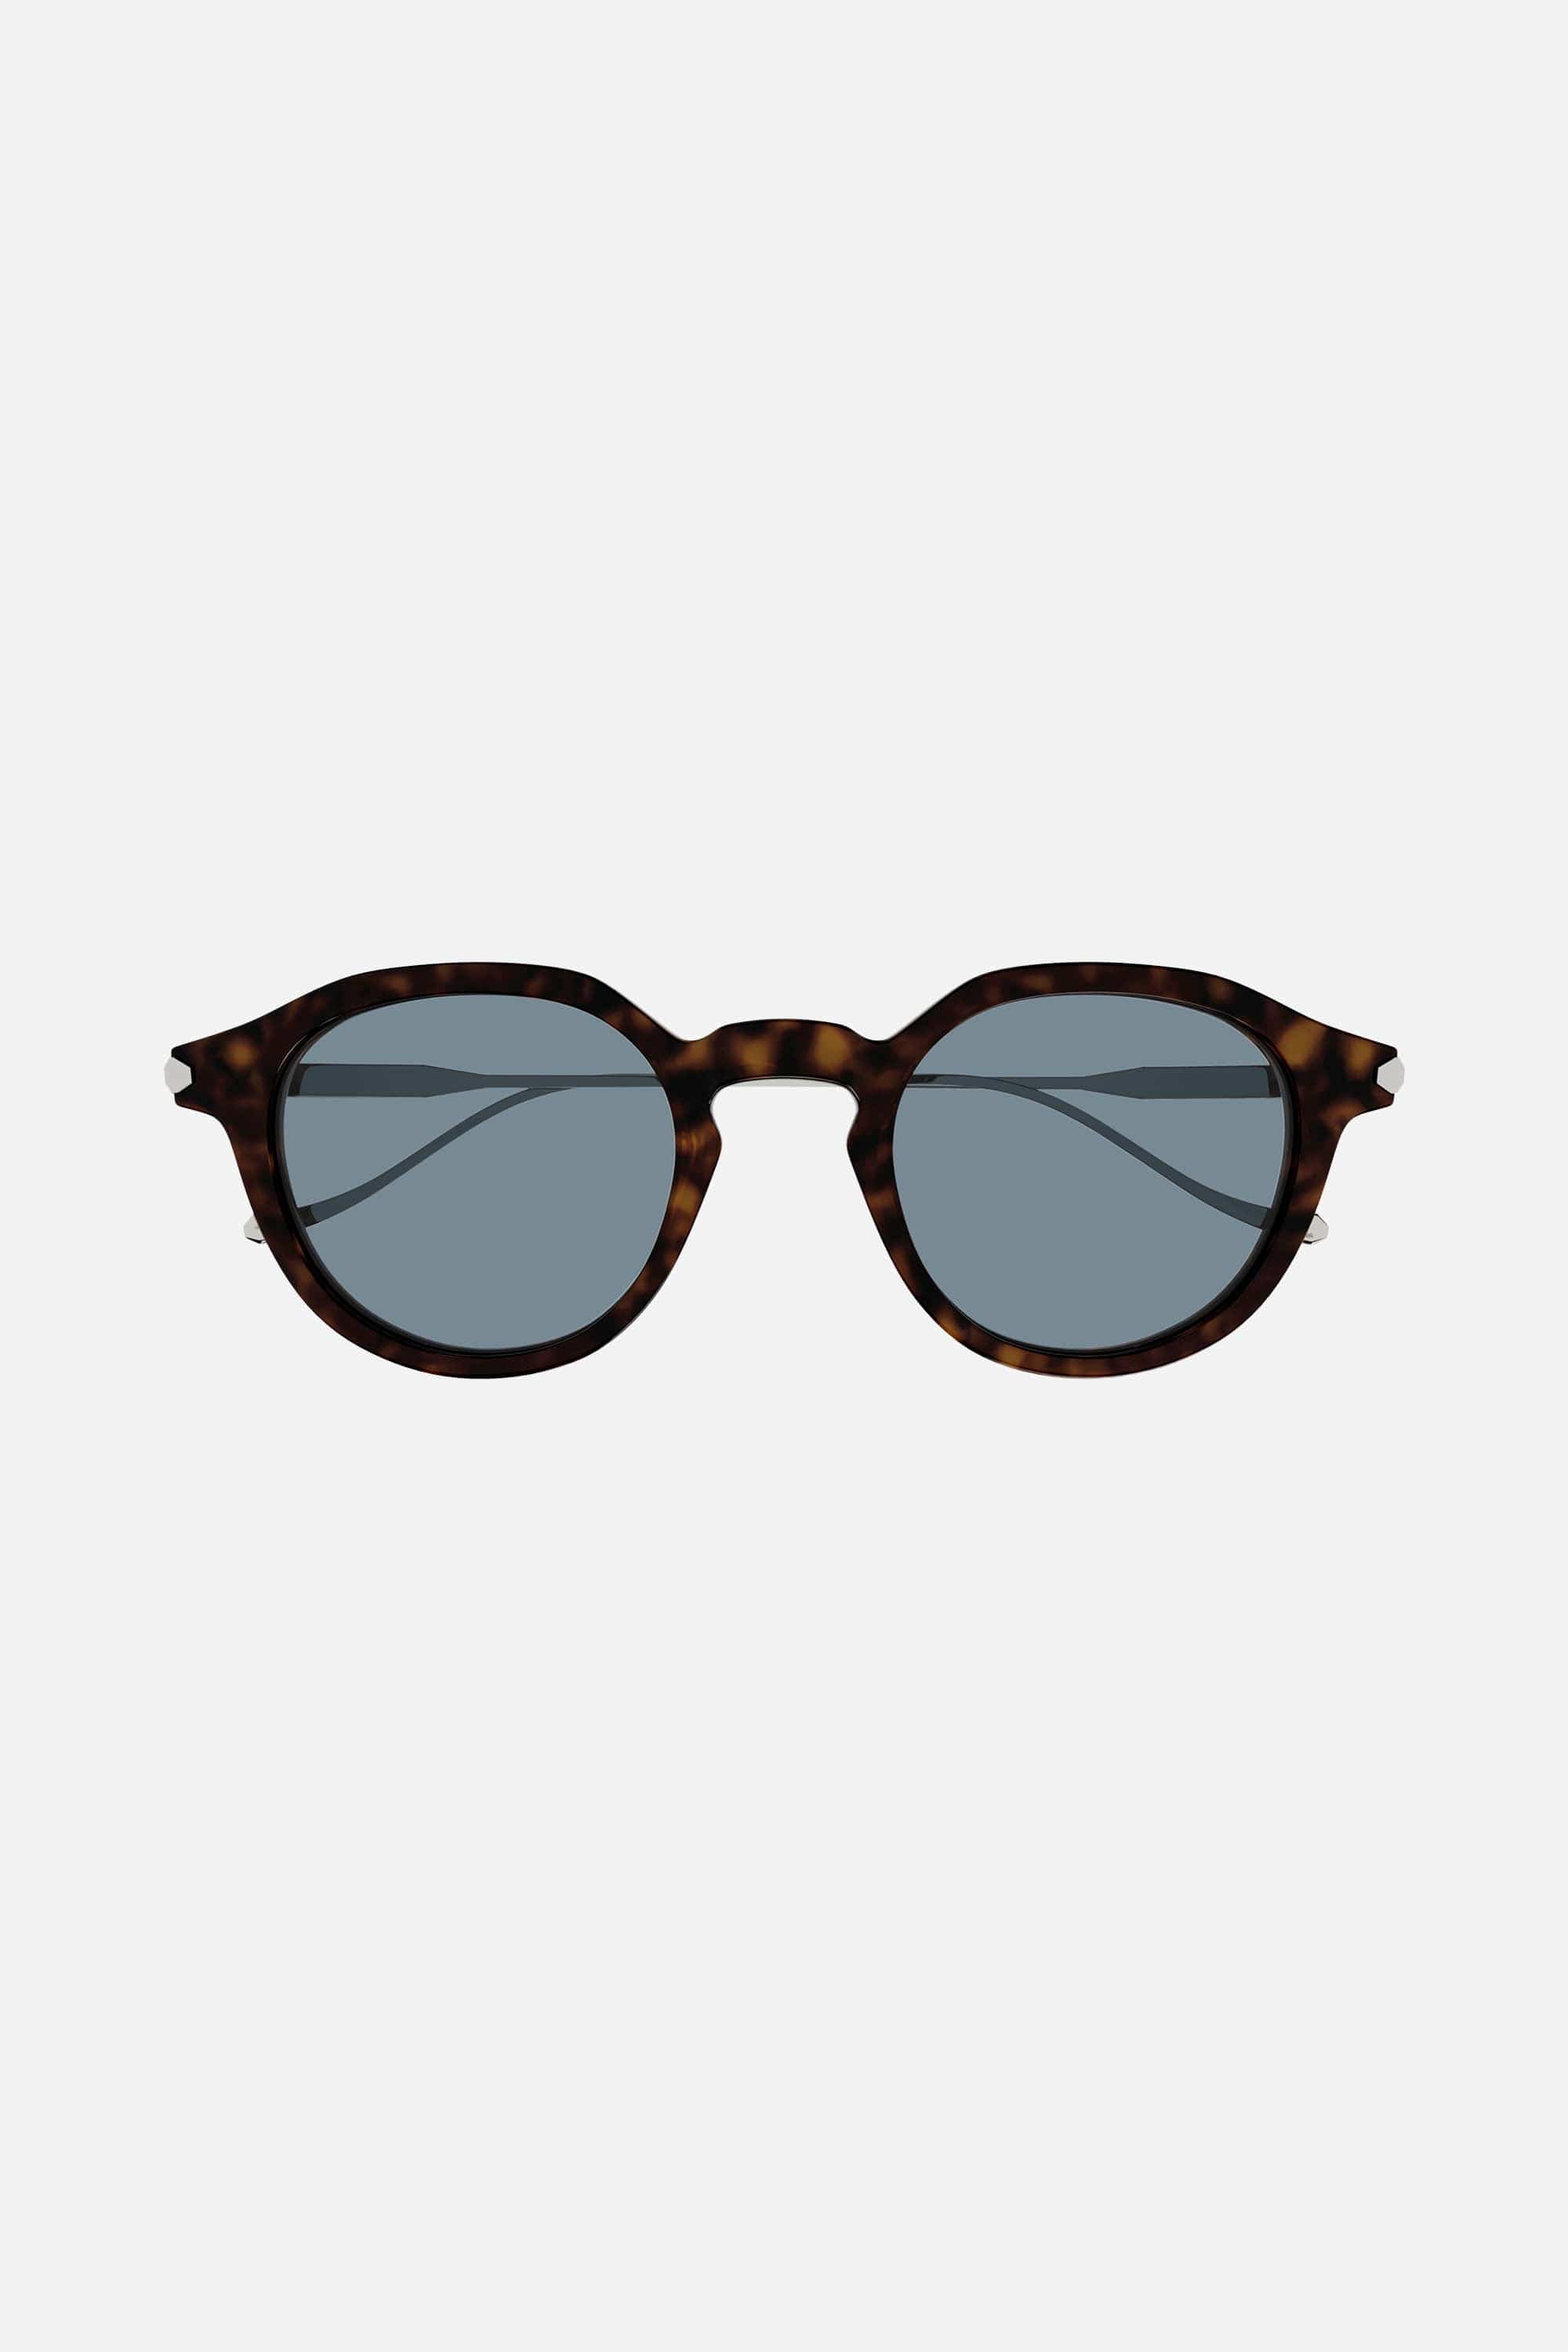 Brioni round havana sunglasses - Eyewear Club